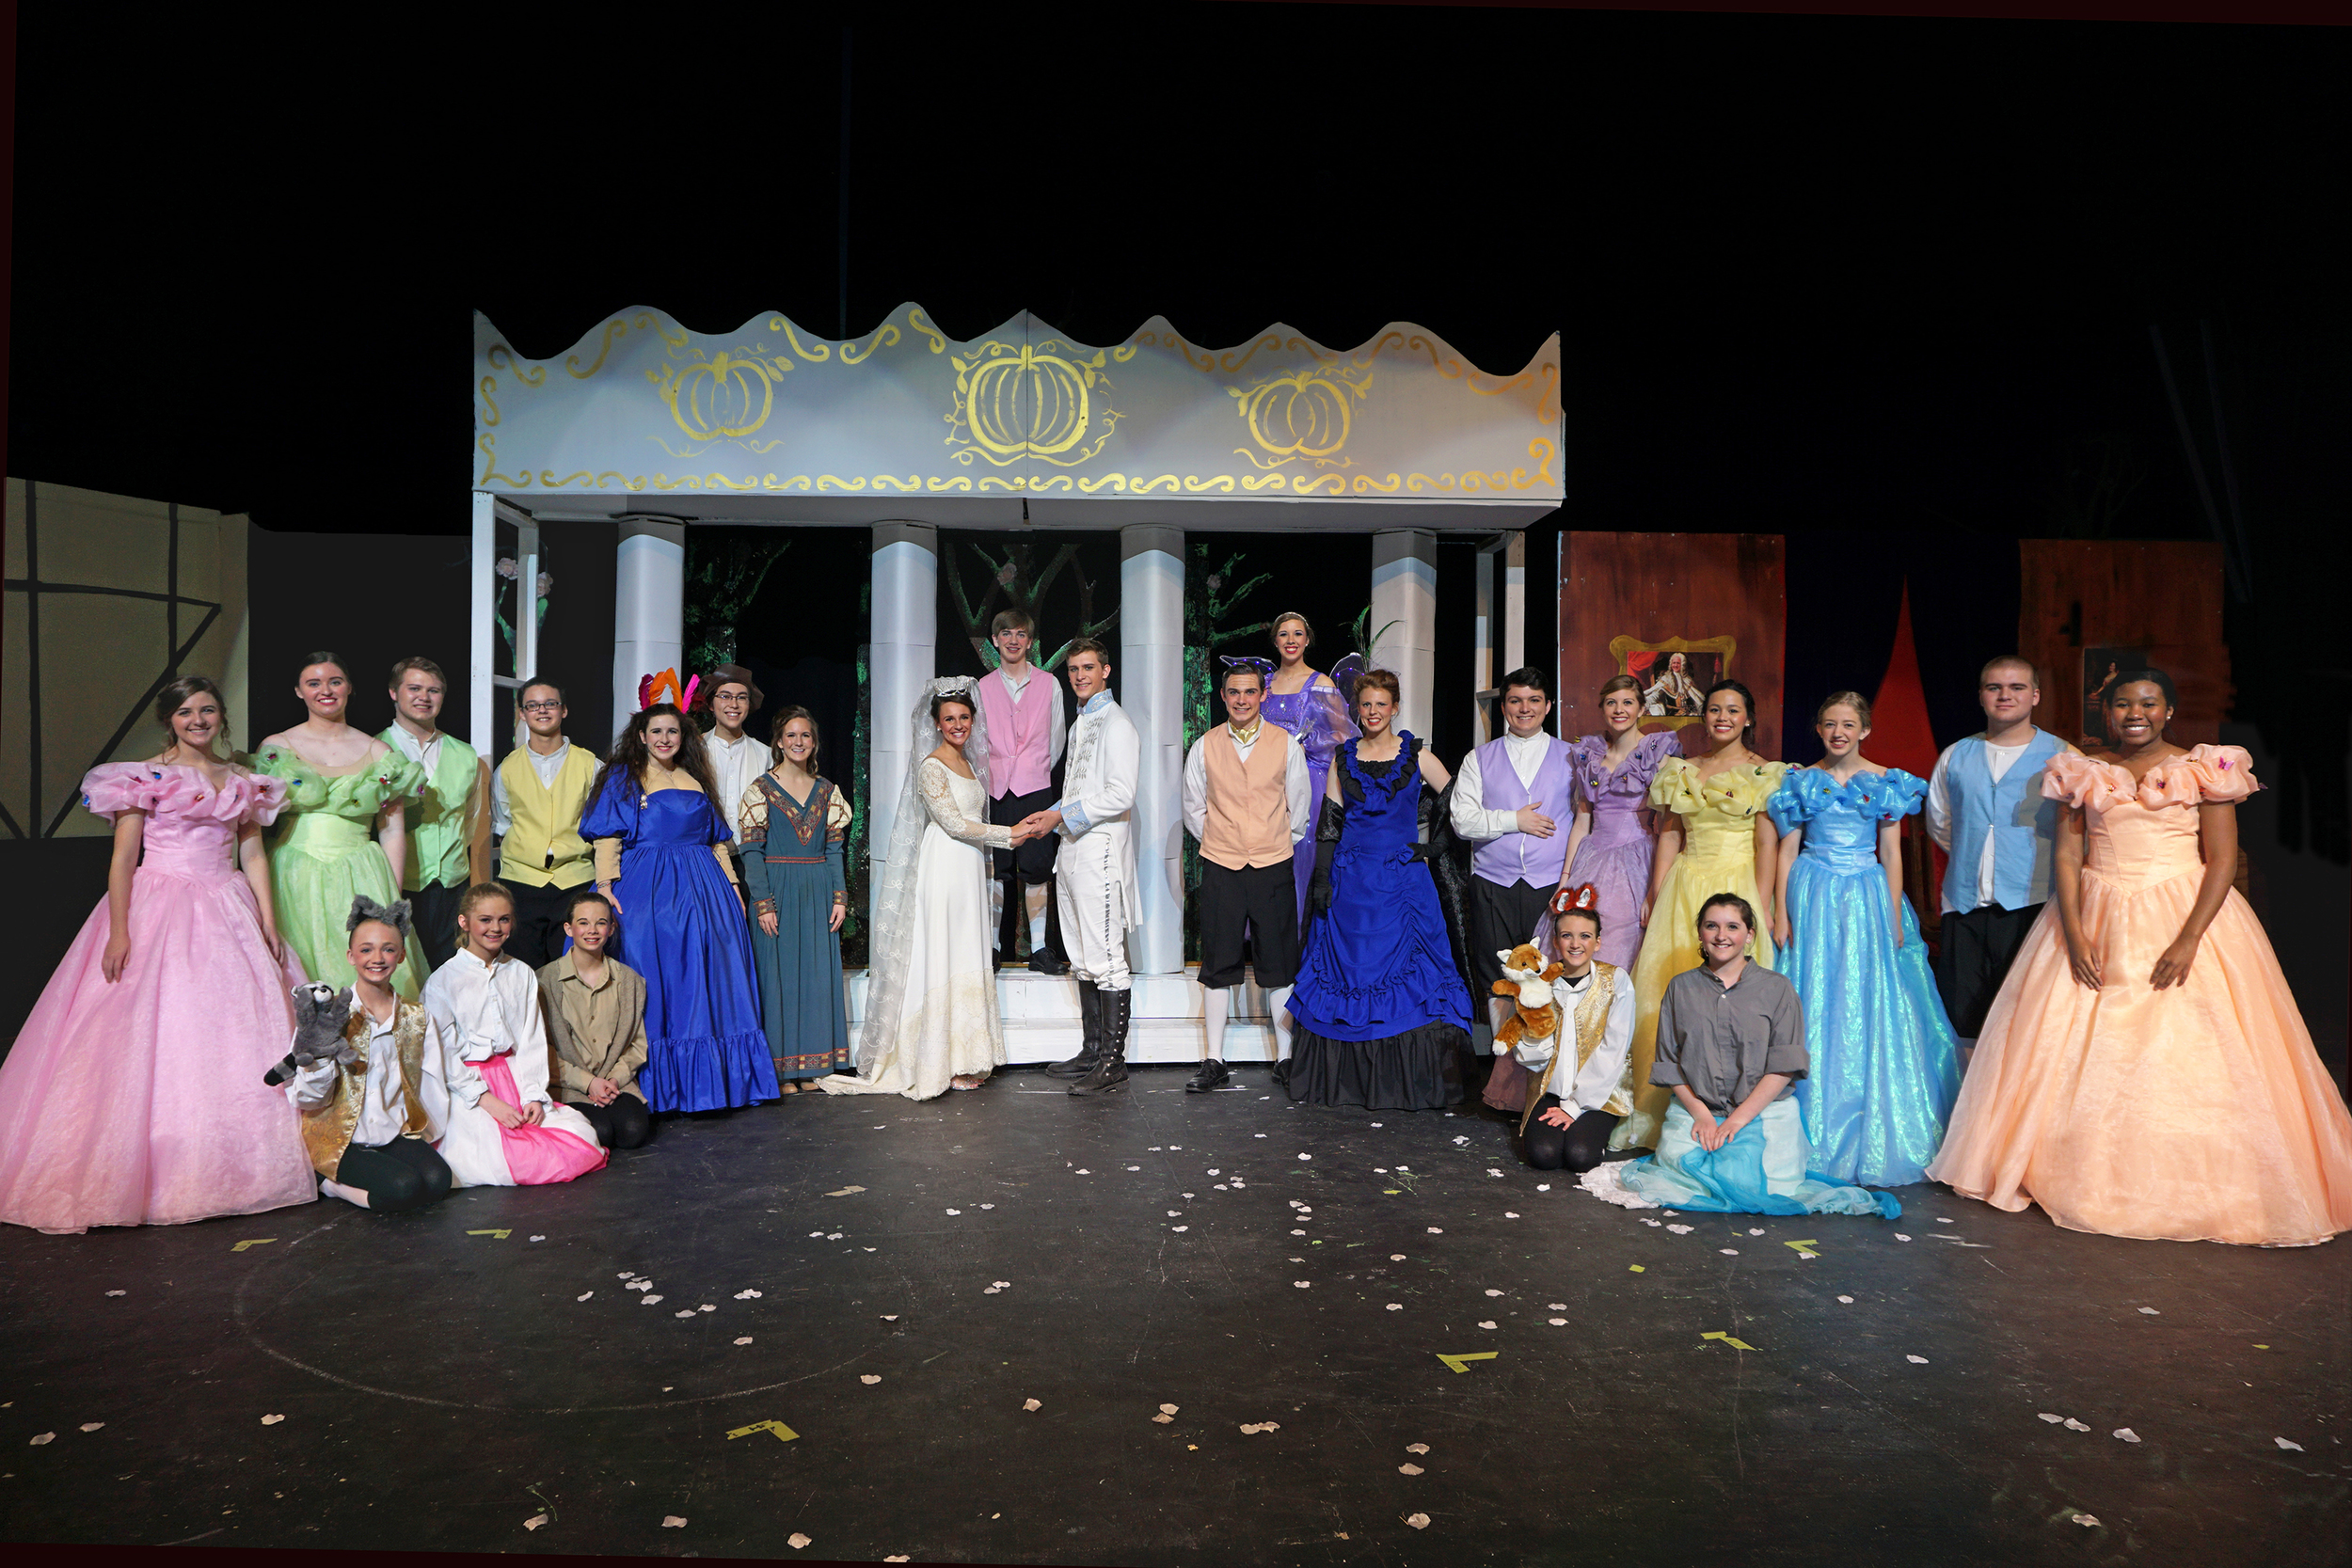 The cast of Cinderella